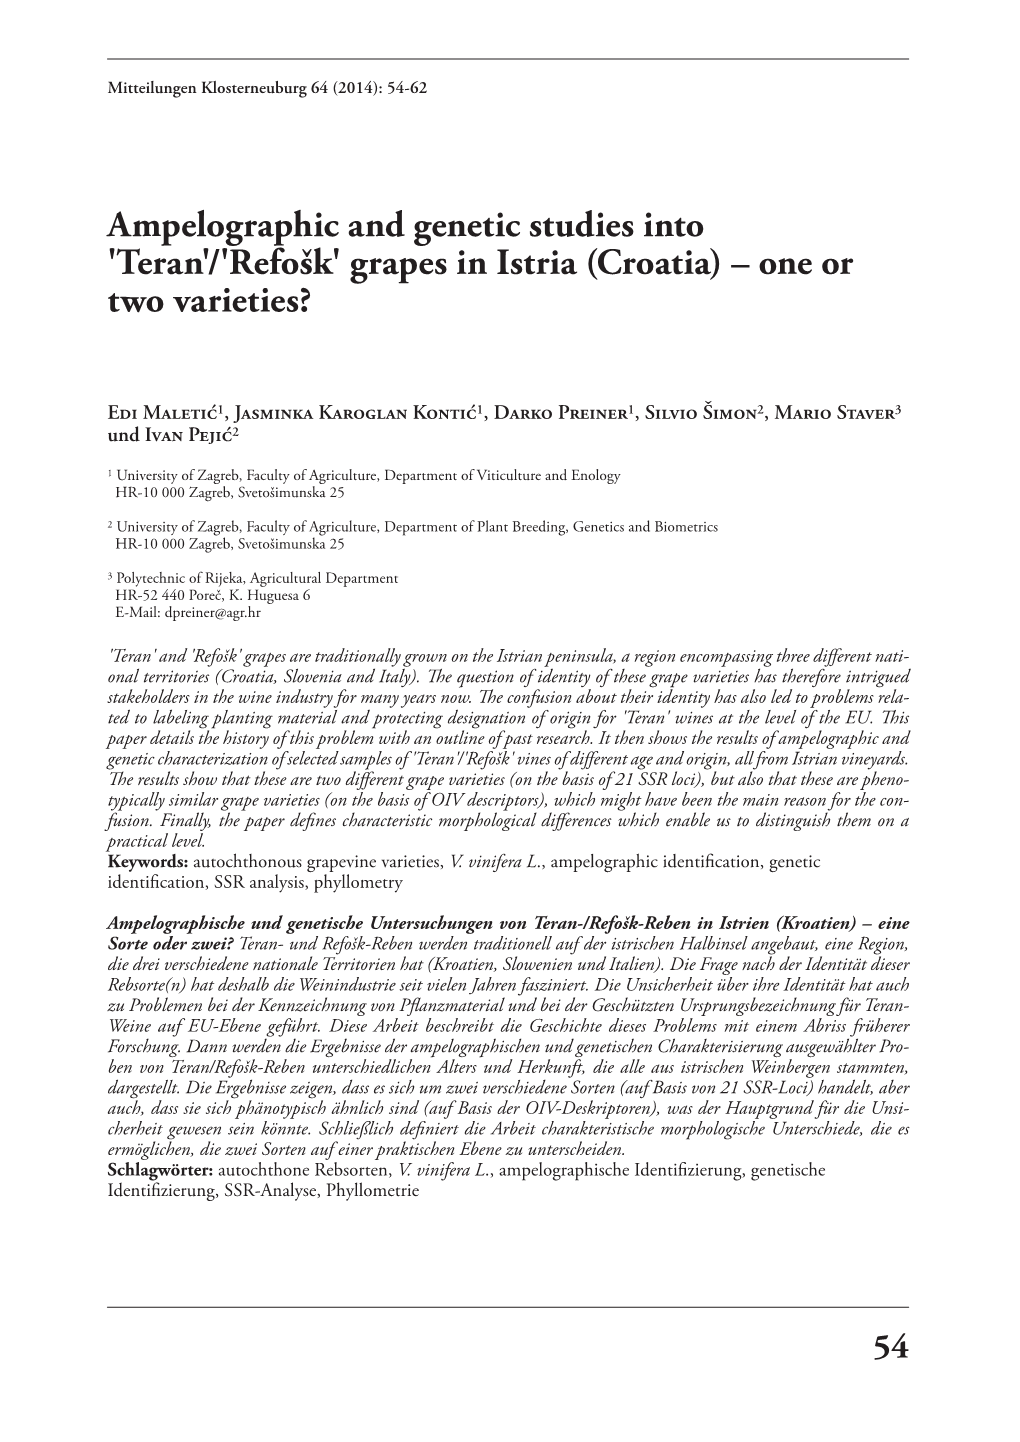 Ampelographic and Genetic Studies Into 'Teran'/'Refošk' Grapes in Istria (Croatia) – One Or Two Varieties?